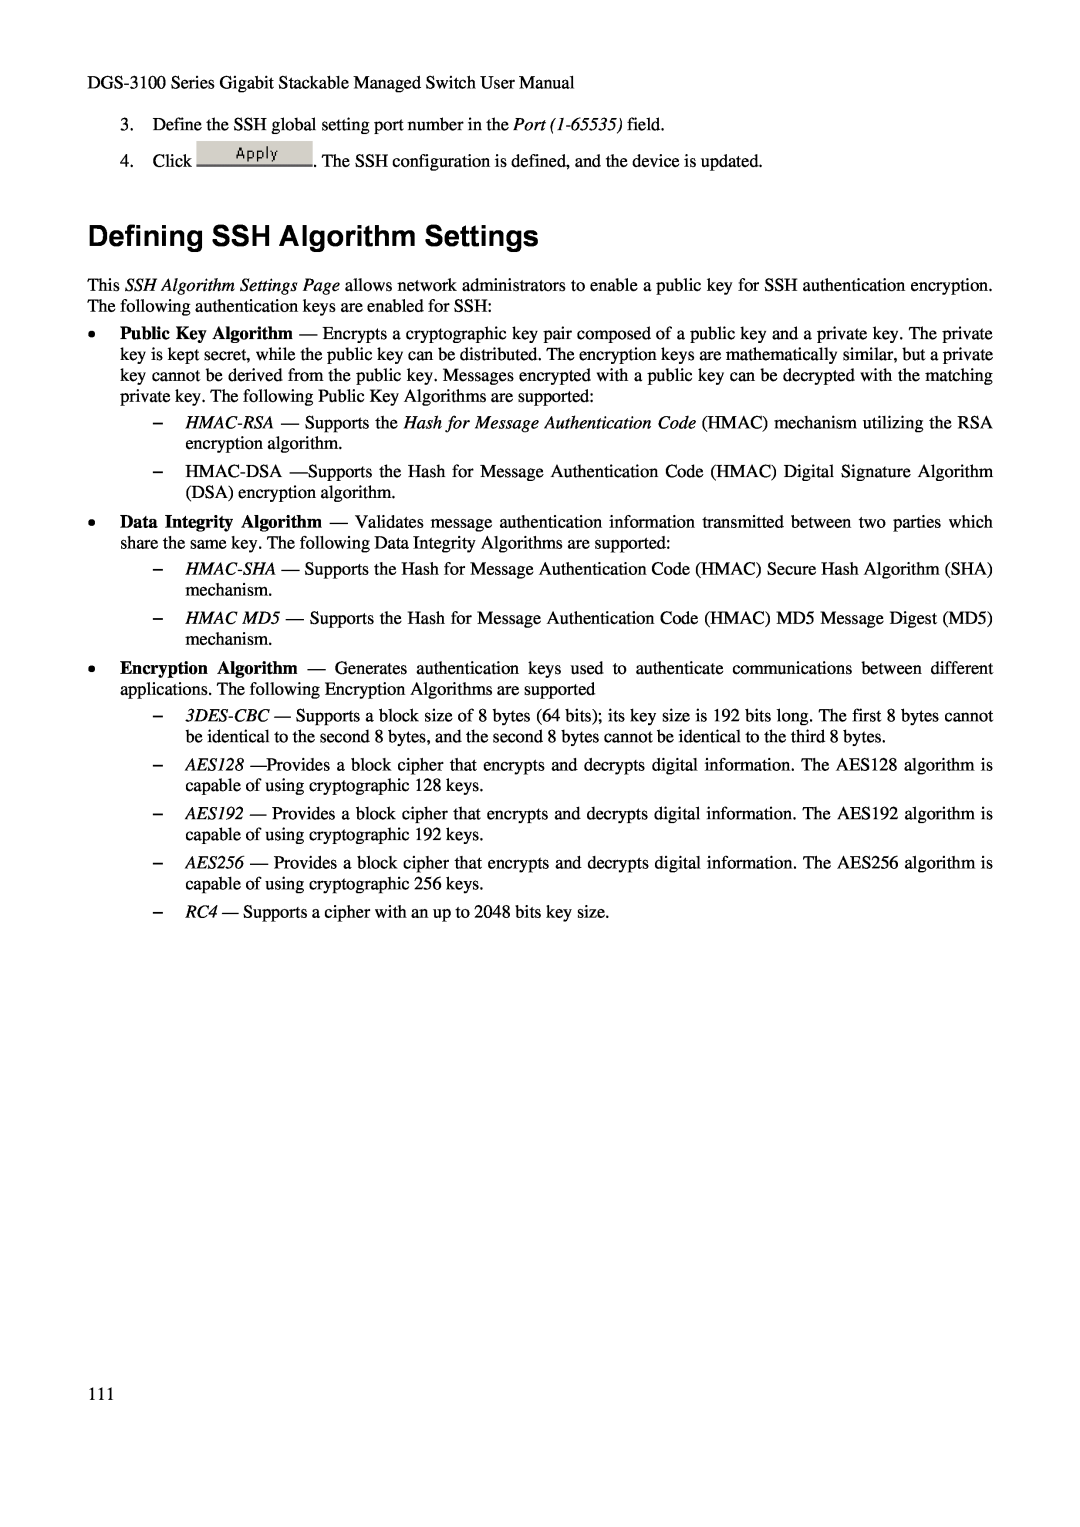 D-Link DGS-3100 user manual Defining SSH Algorithm Settings 